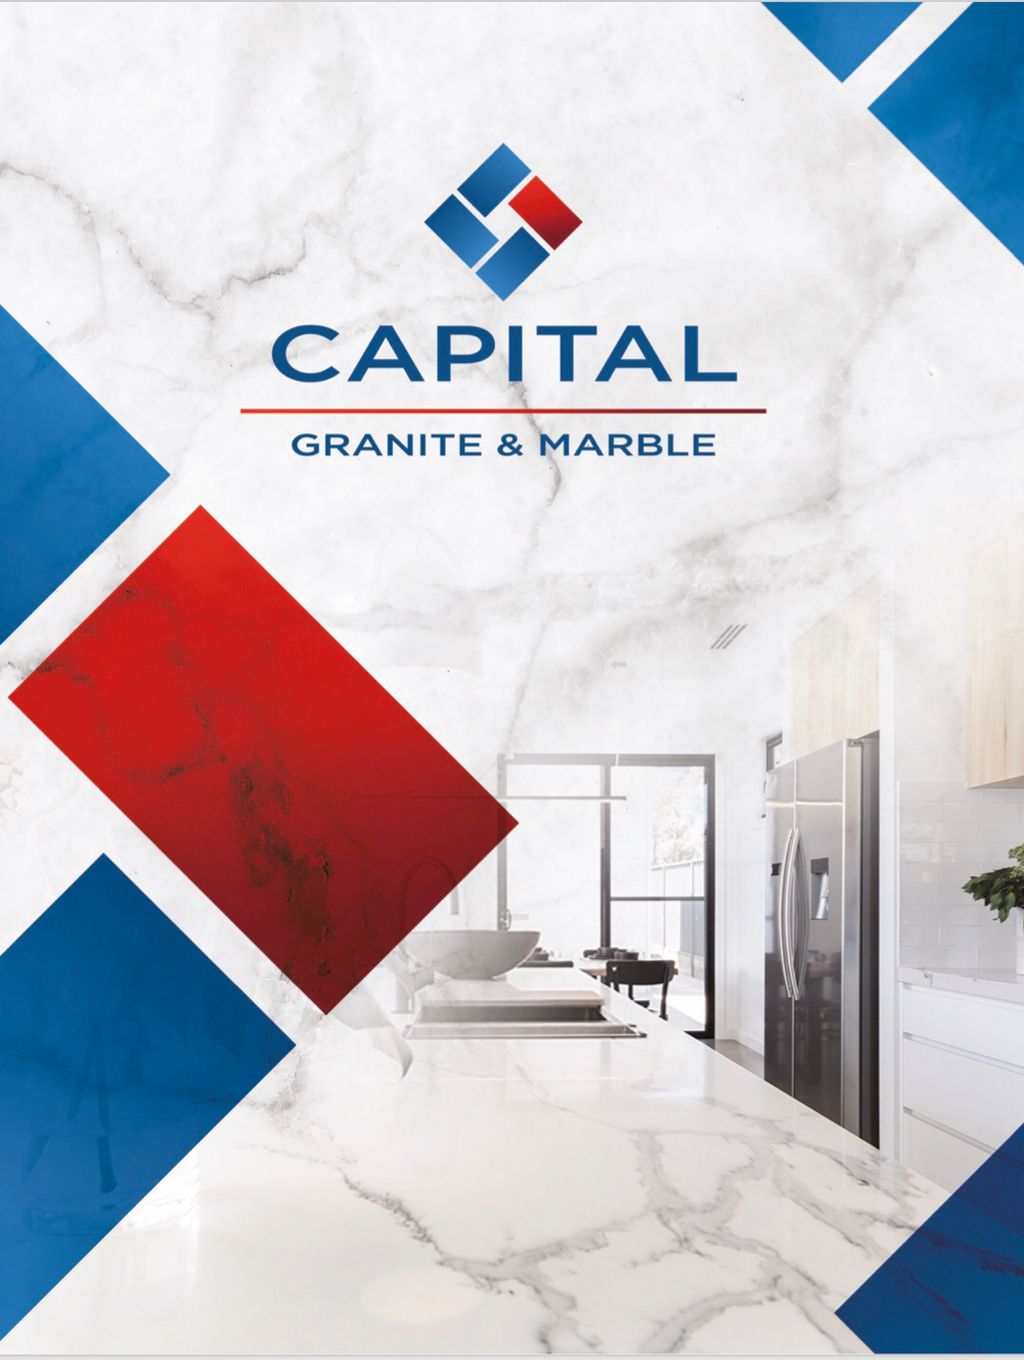 Capital Granite and Marble, LLC